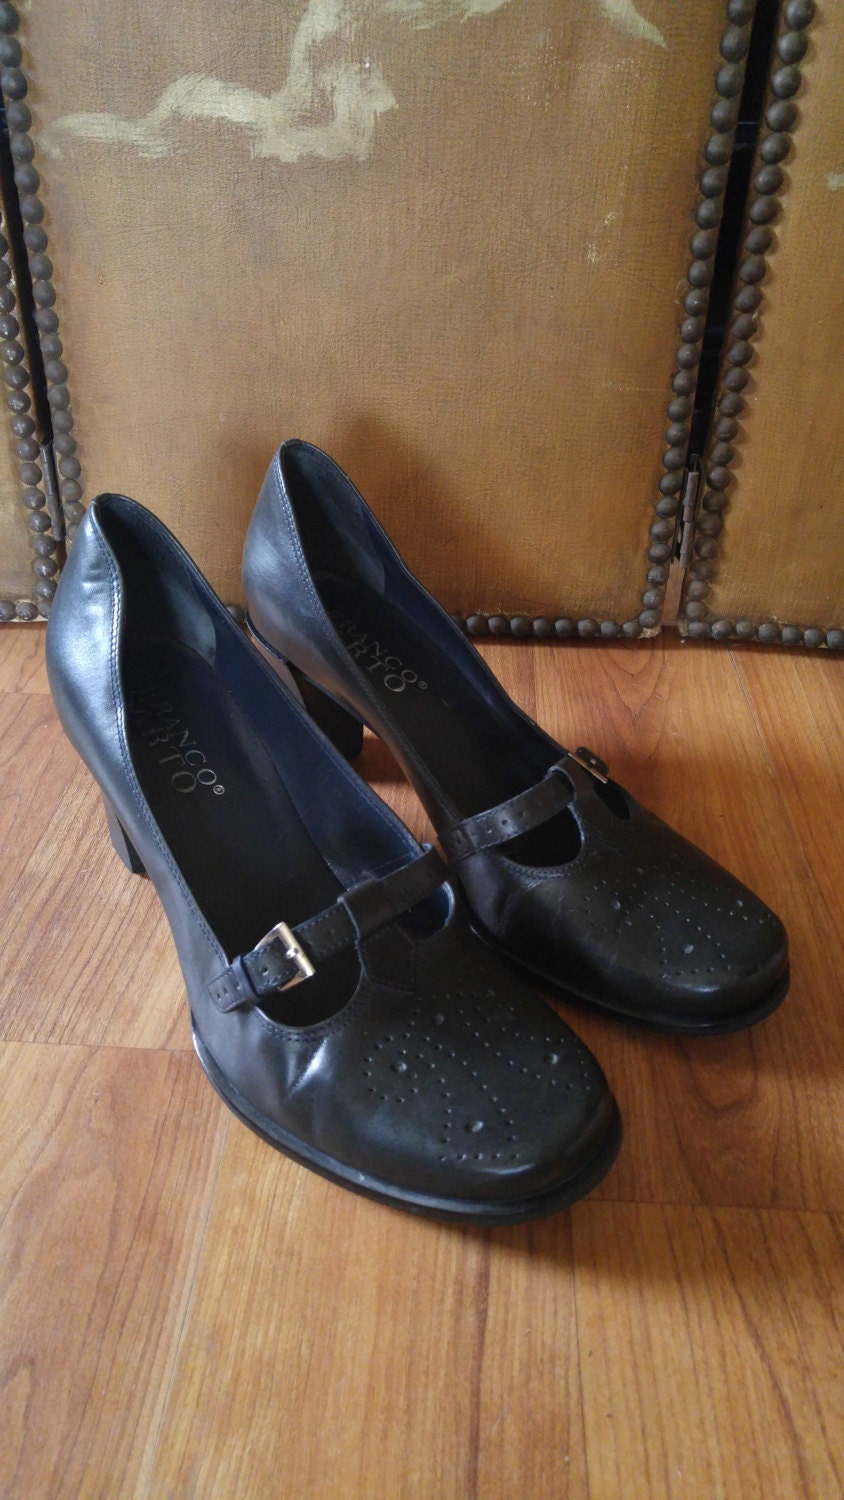 90s black leather Franco Sarto mary jane style shoes